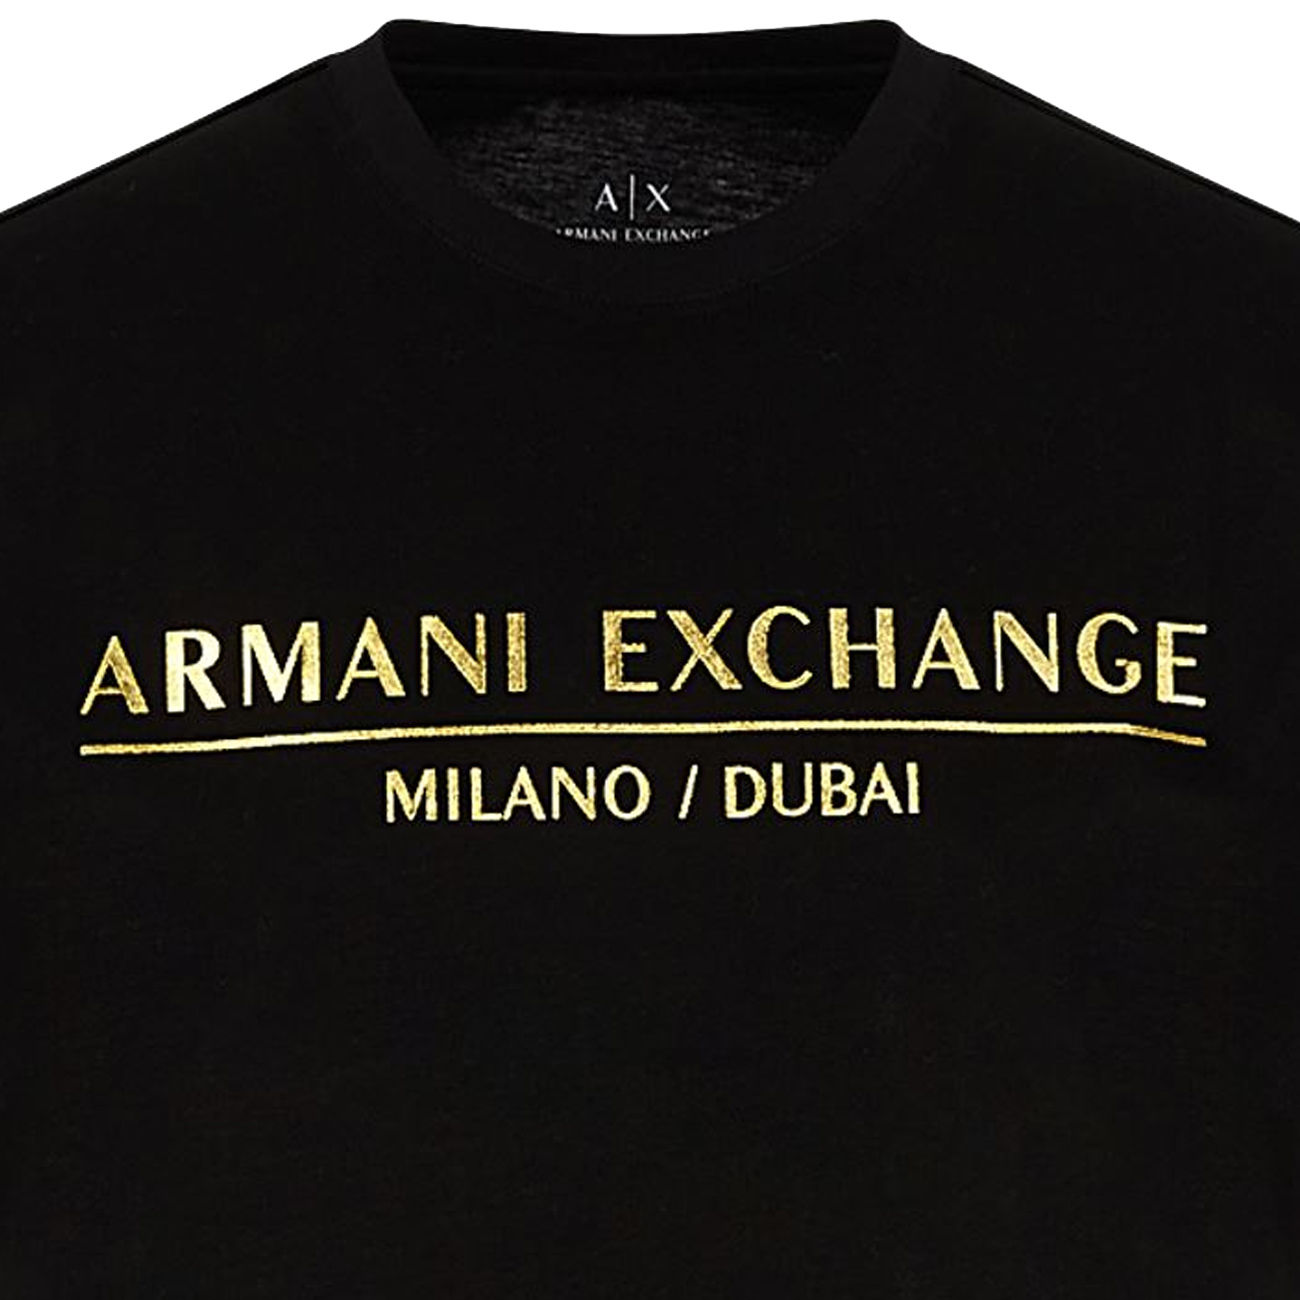 Introducir 86+ imagen armani exchange milano dubai